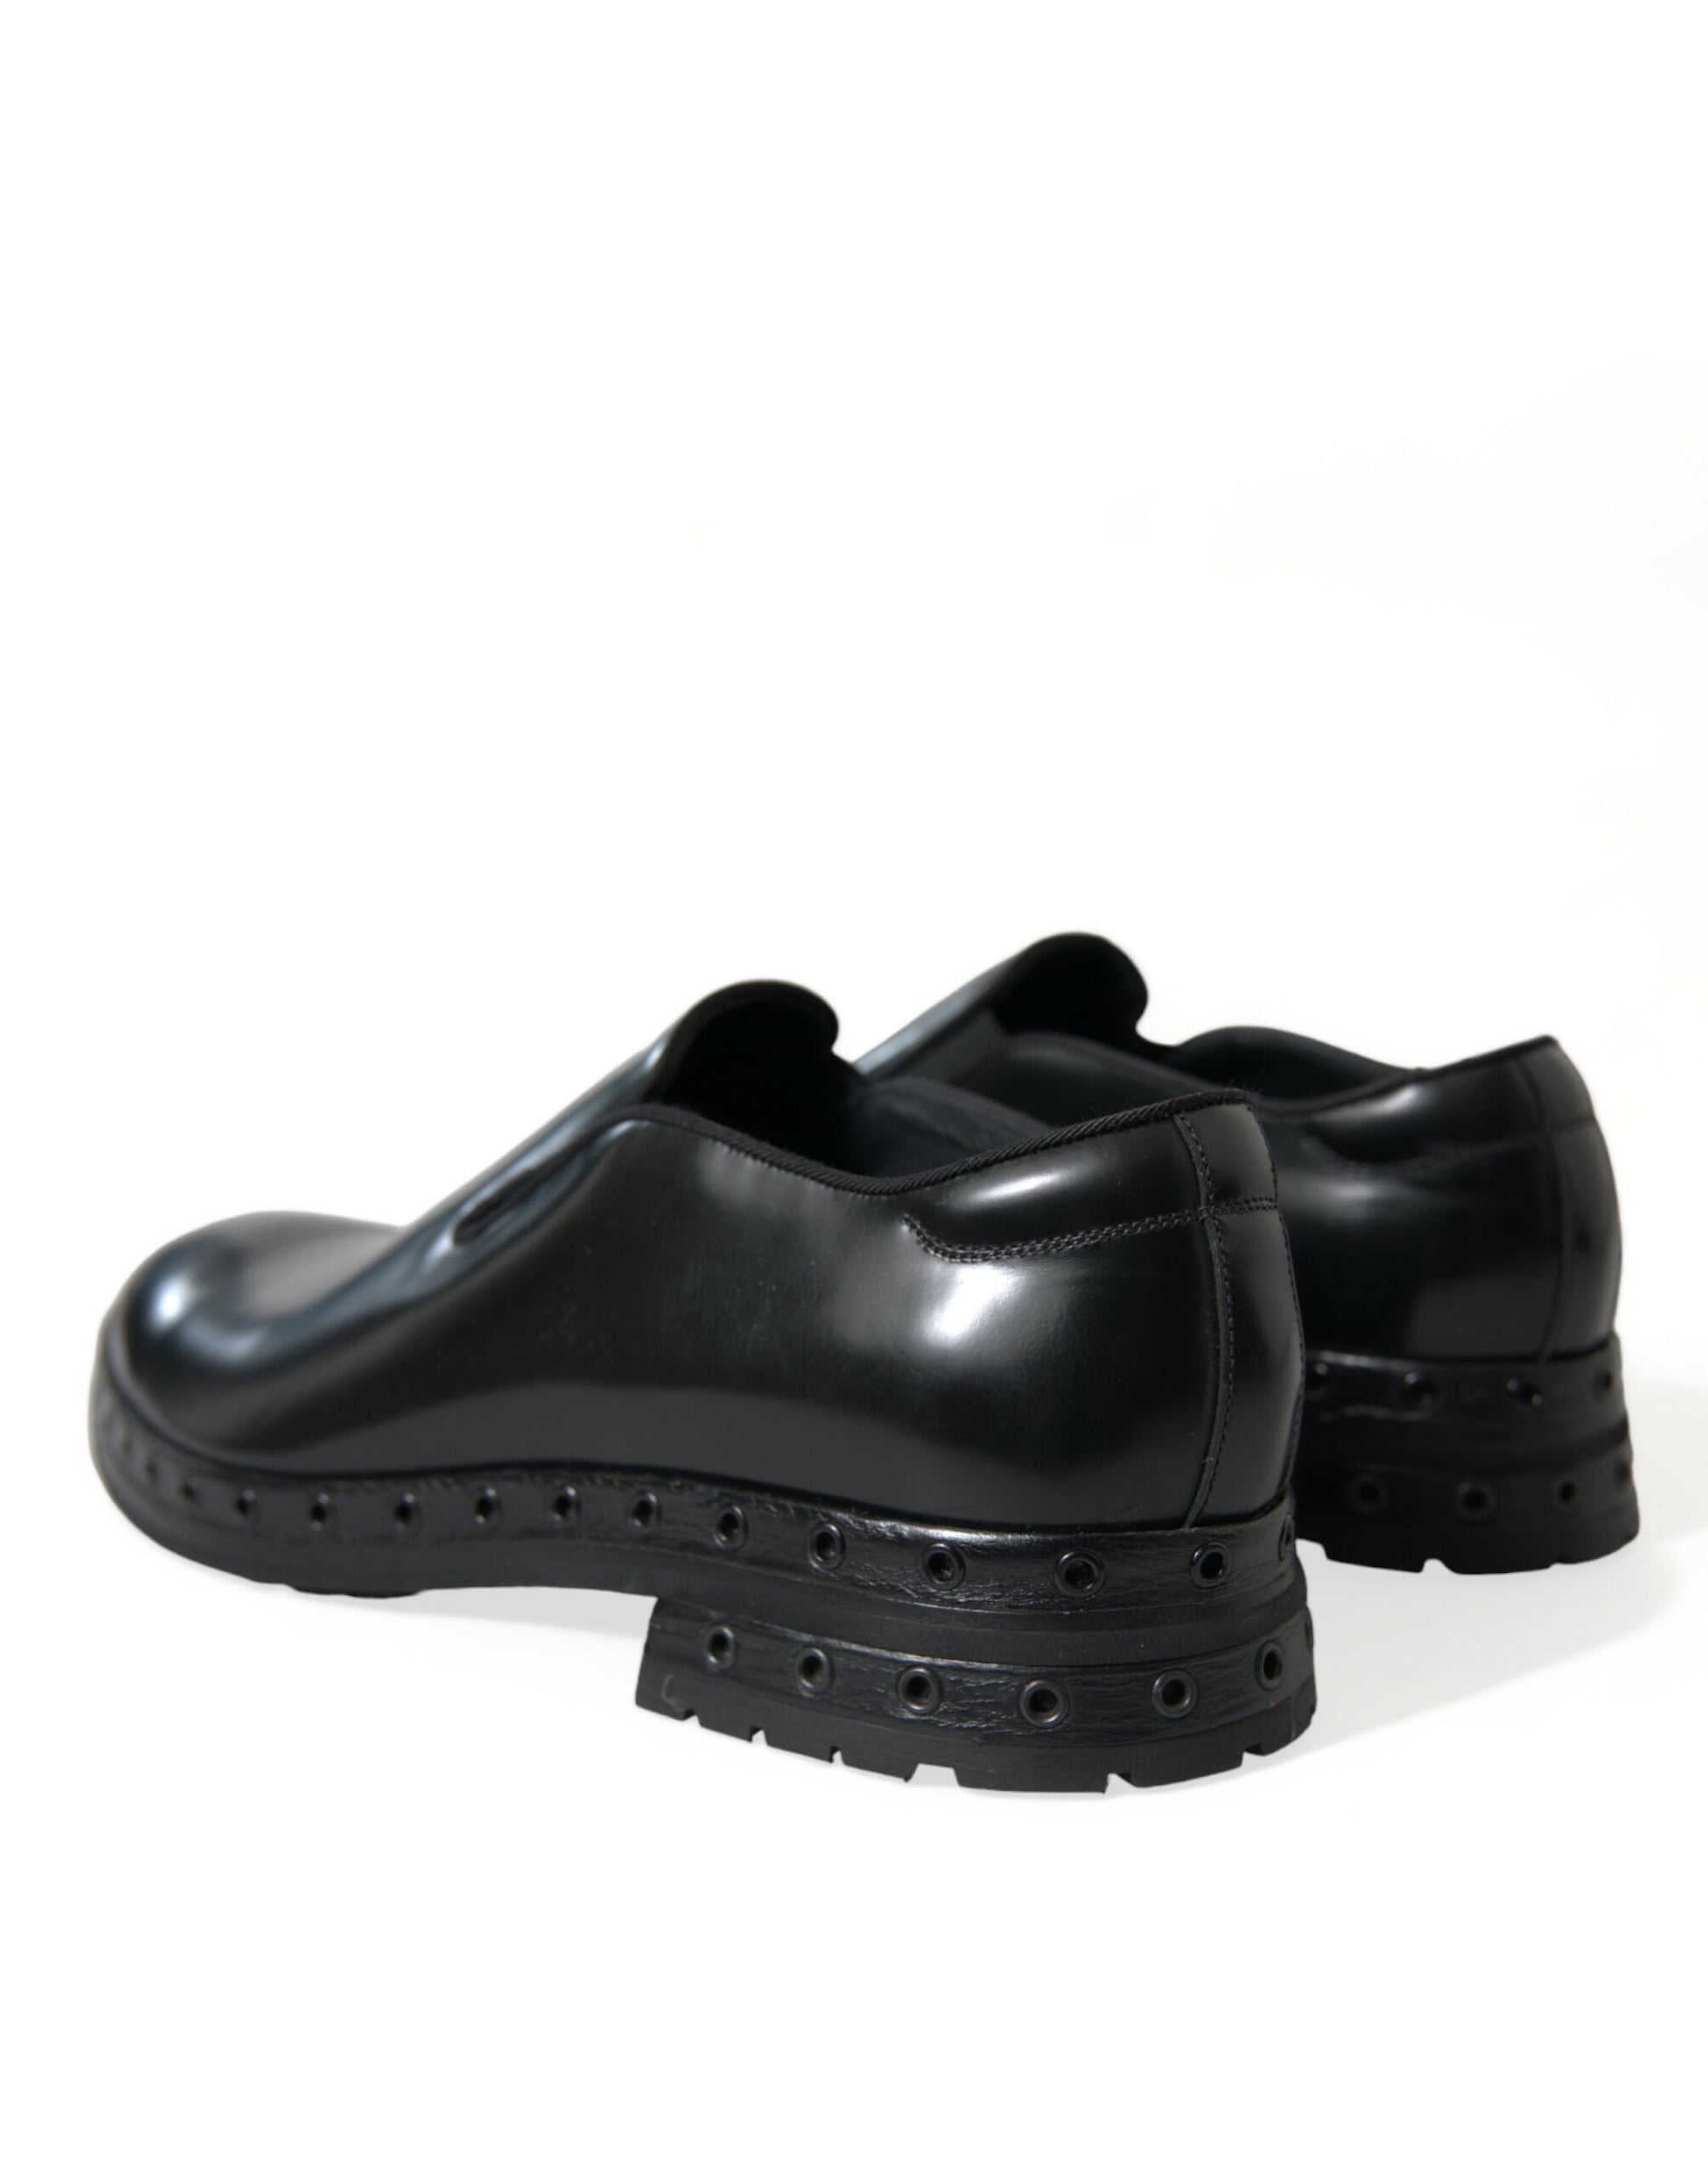 Dolce & Gabbana Black Leather Studded Loafers Dress Shoes | Fashionsarah.com